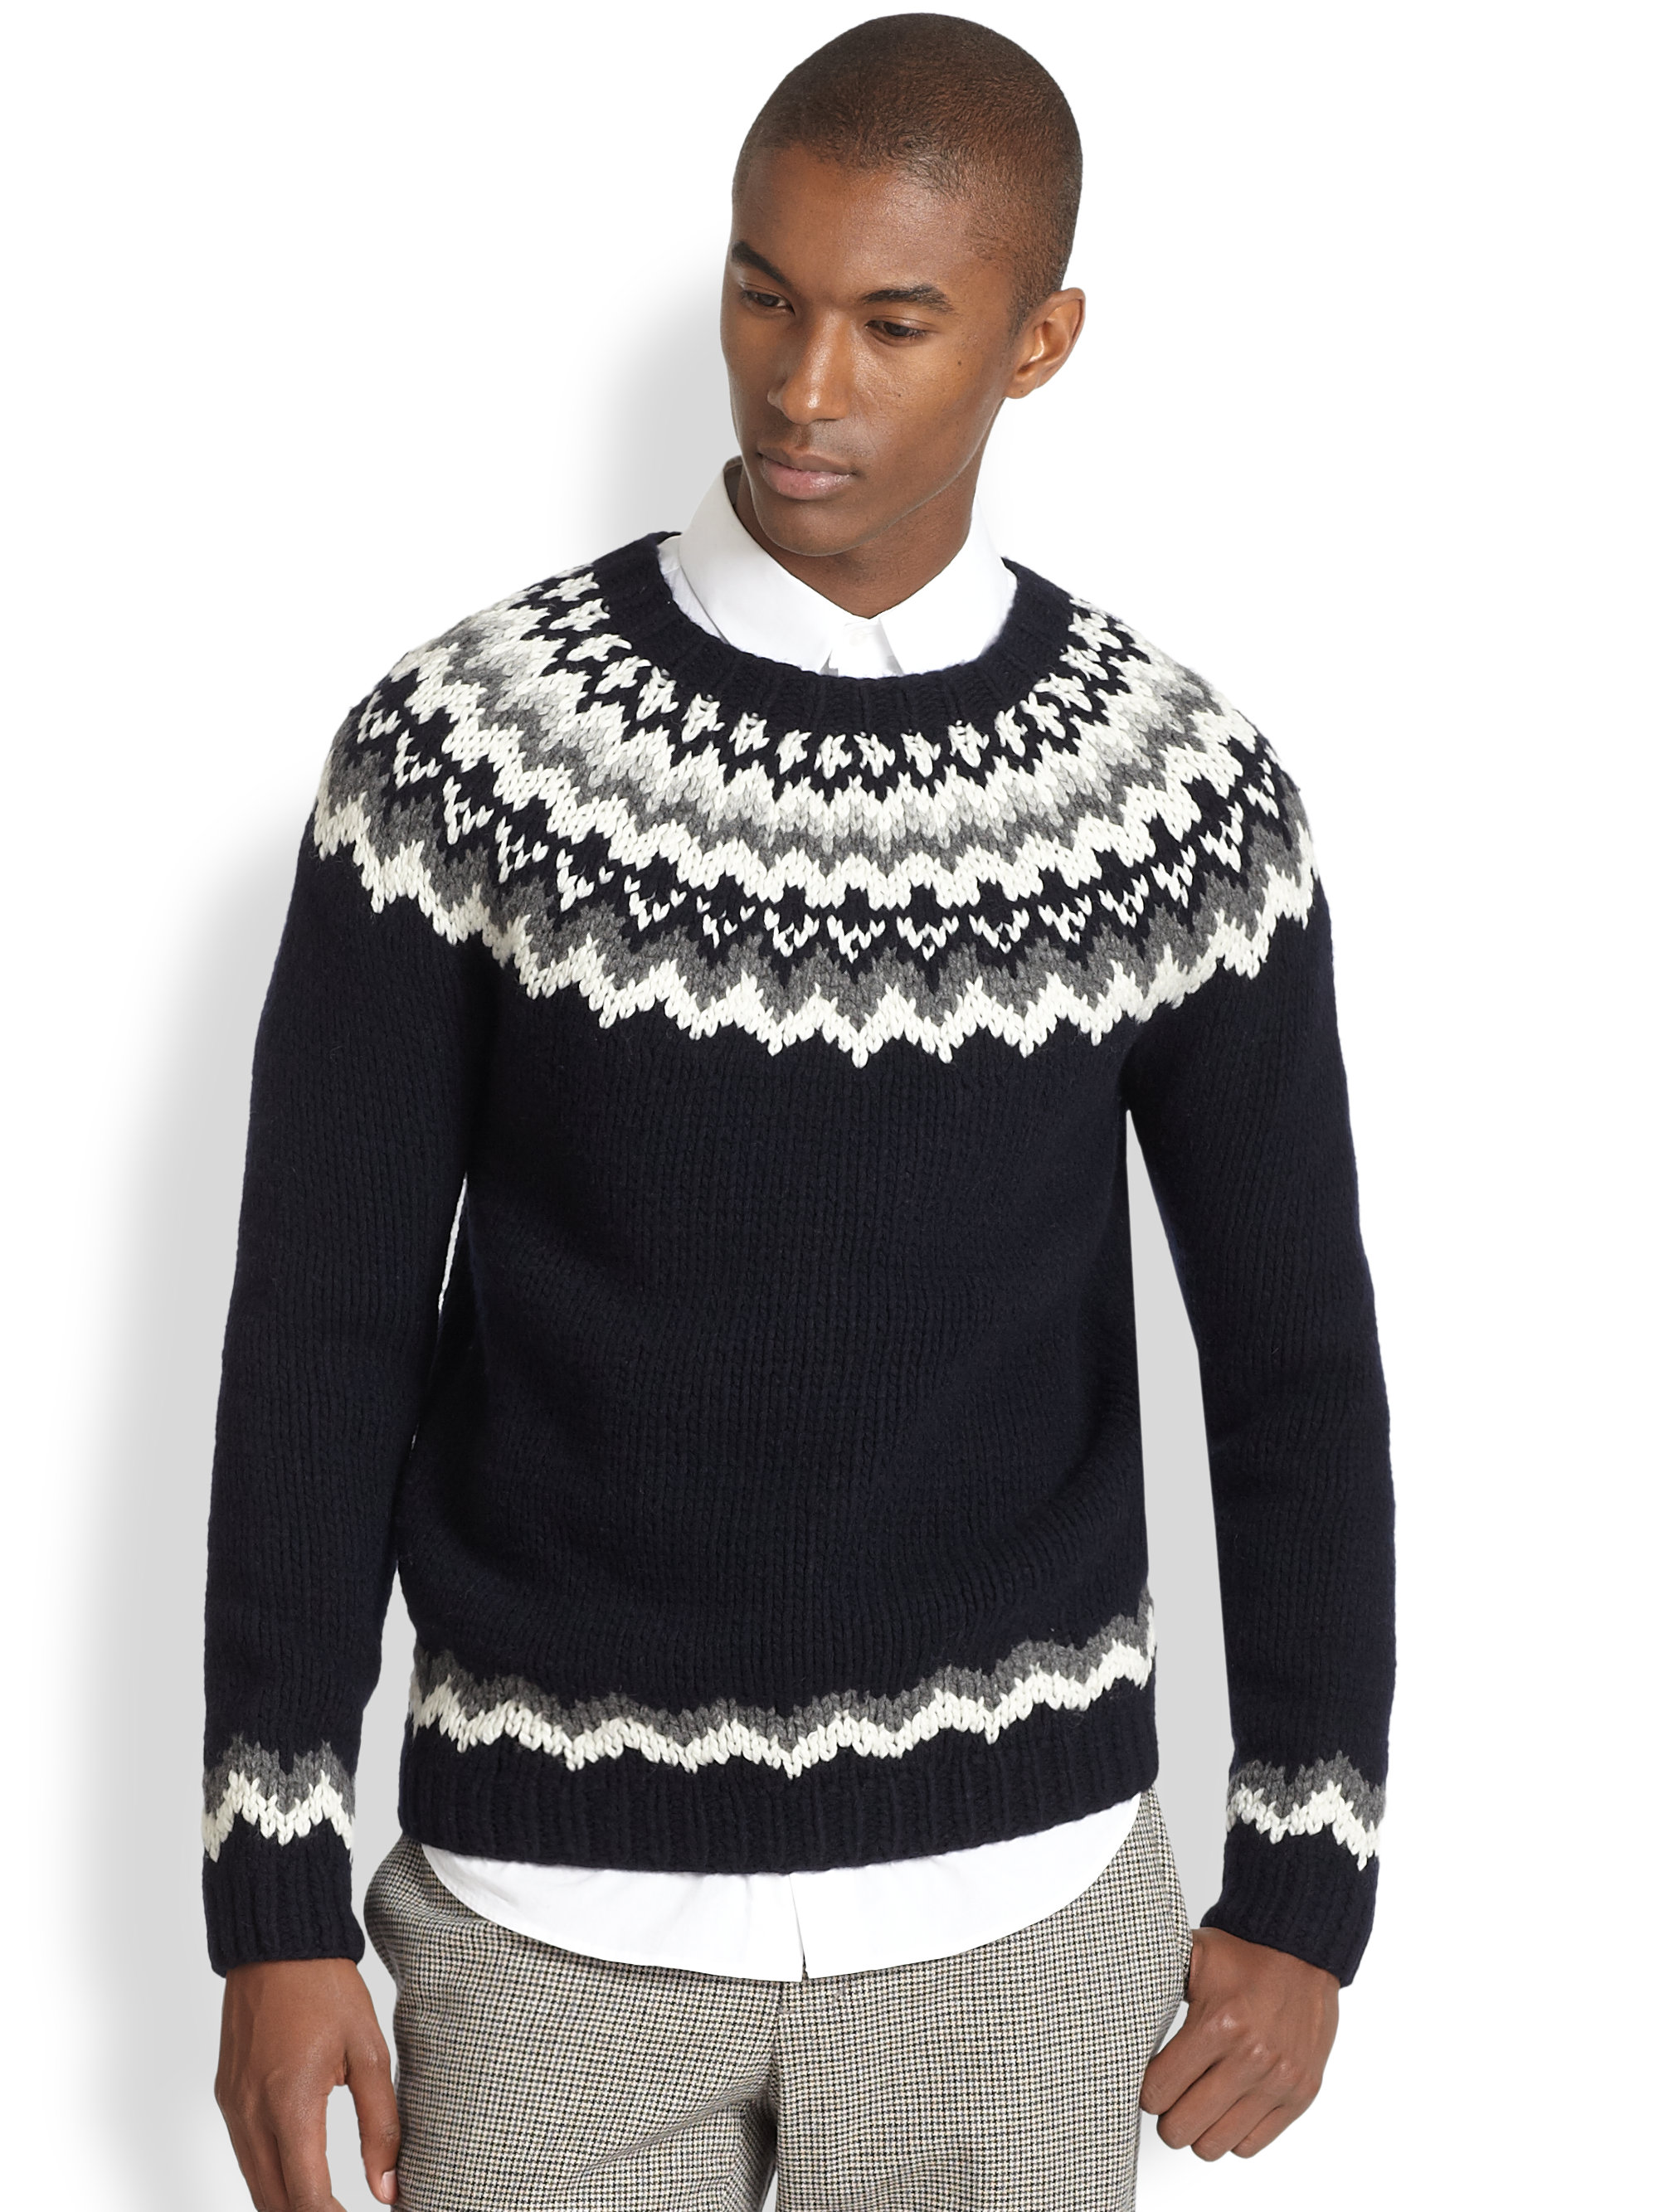 Men's Boutique Store Hot Sale 2015 winter male sweaters